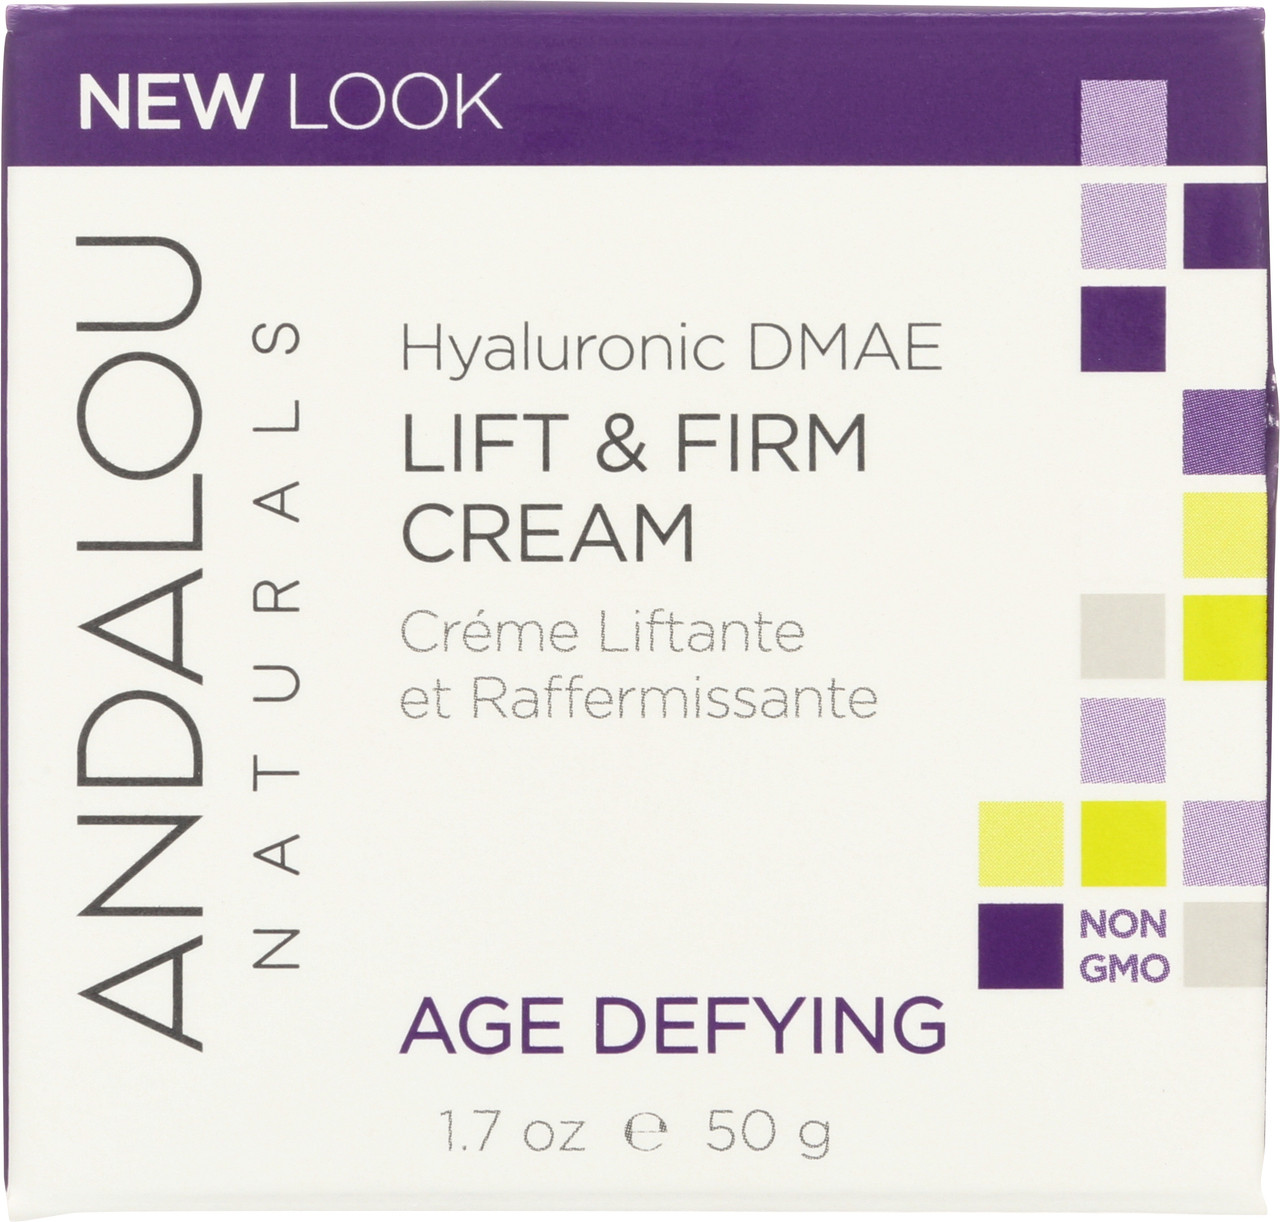 Lift & Firm Cream Hyaluronic Dmae